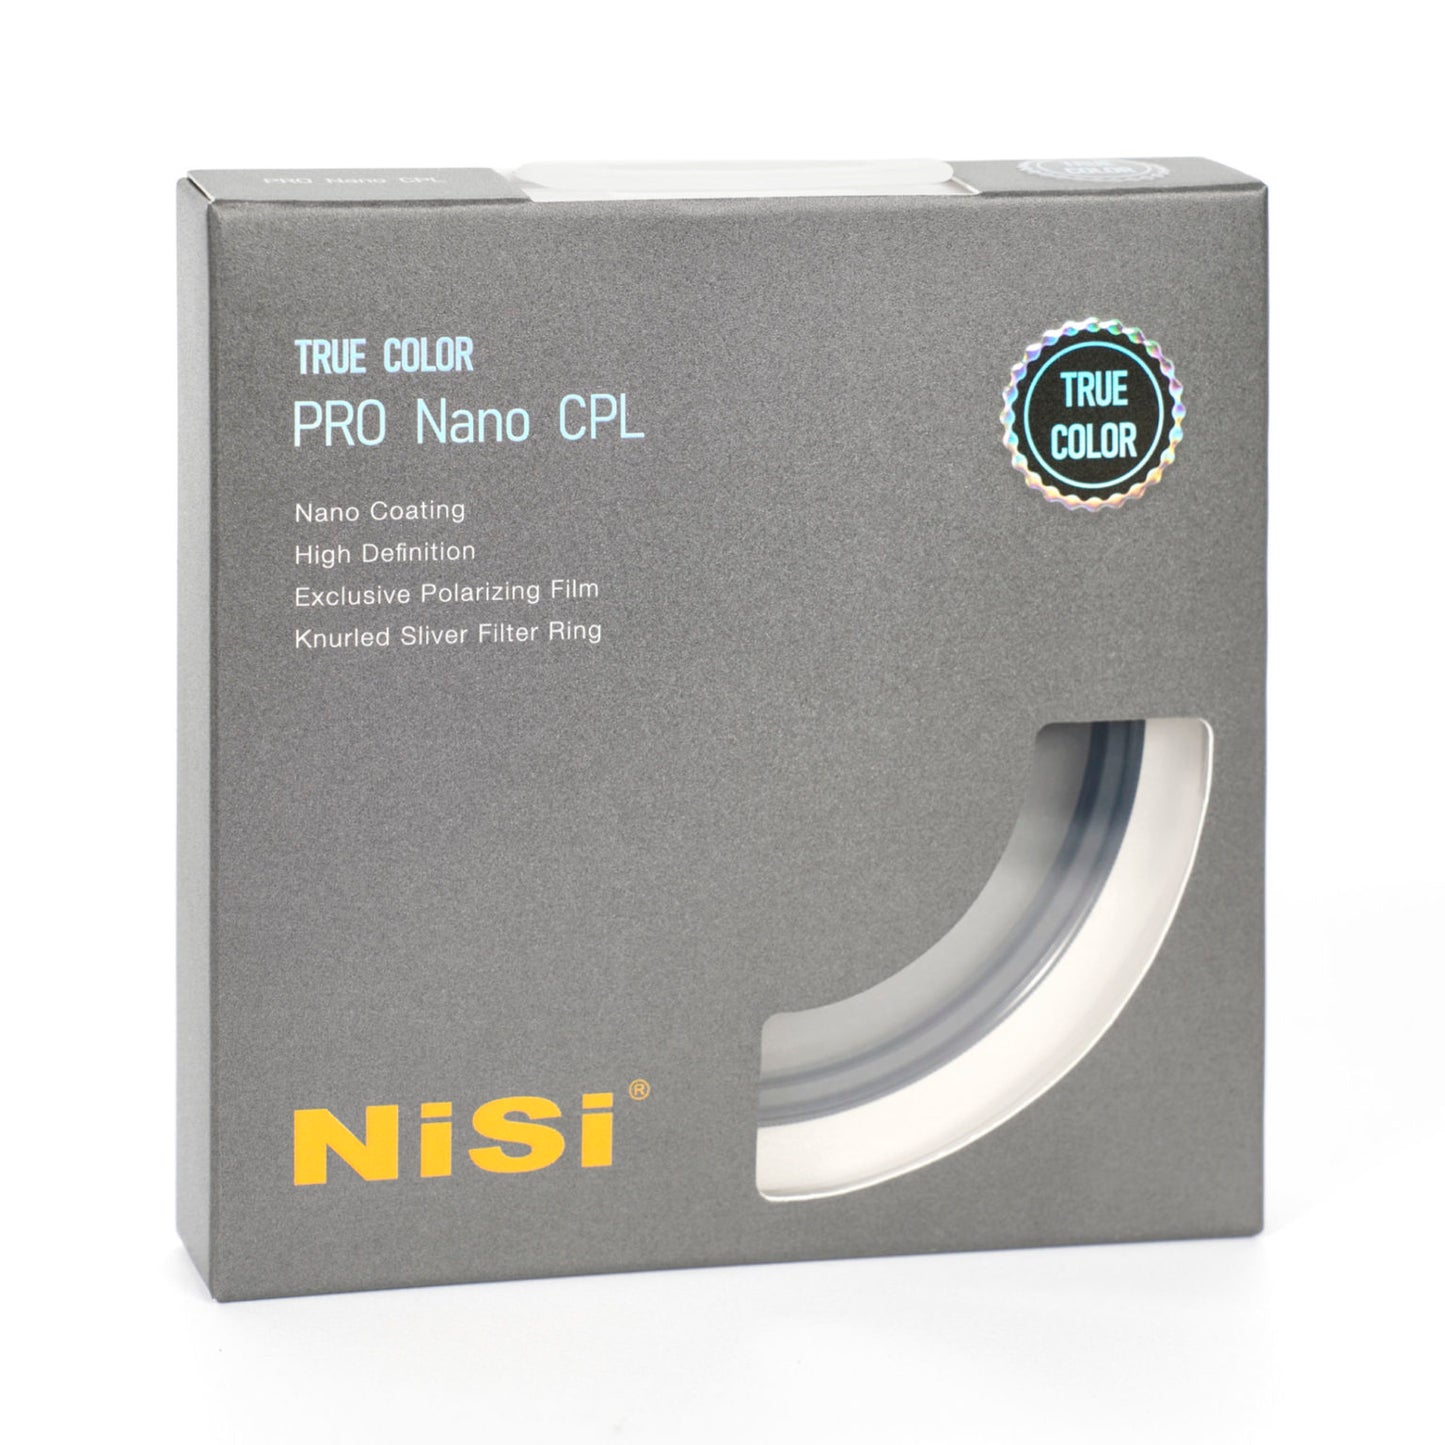 NiSi 58mm True Color Pro Nano CPL Circular Polarizing Filter